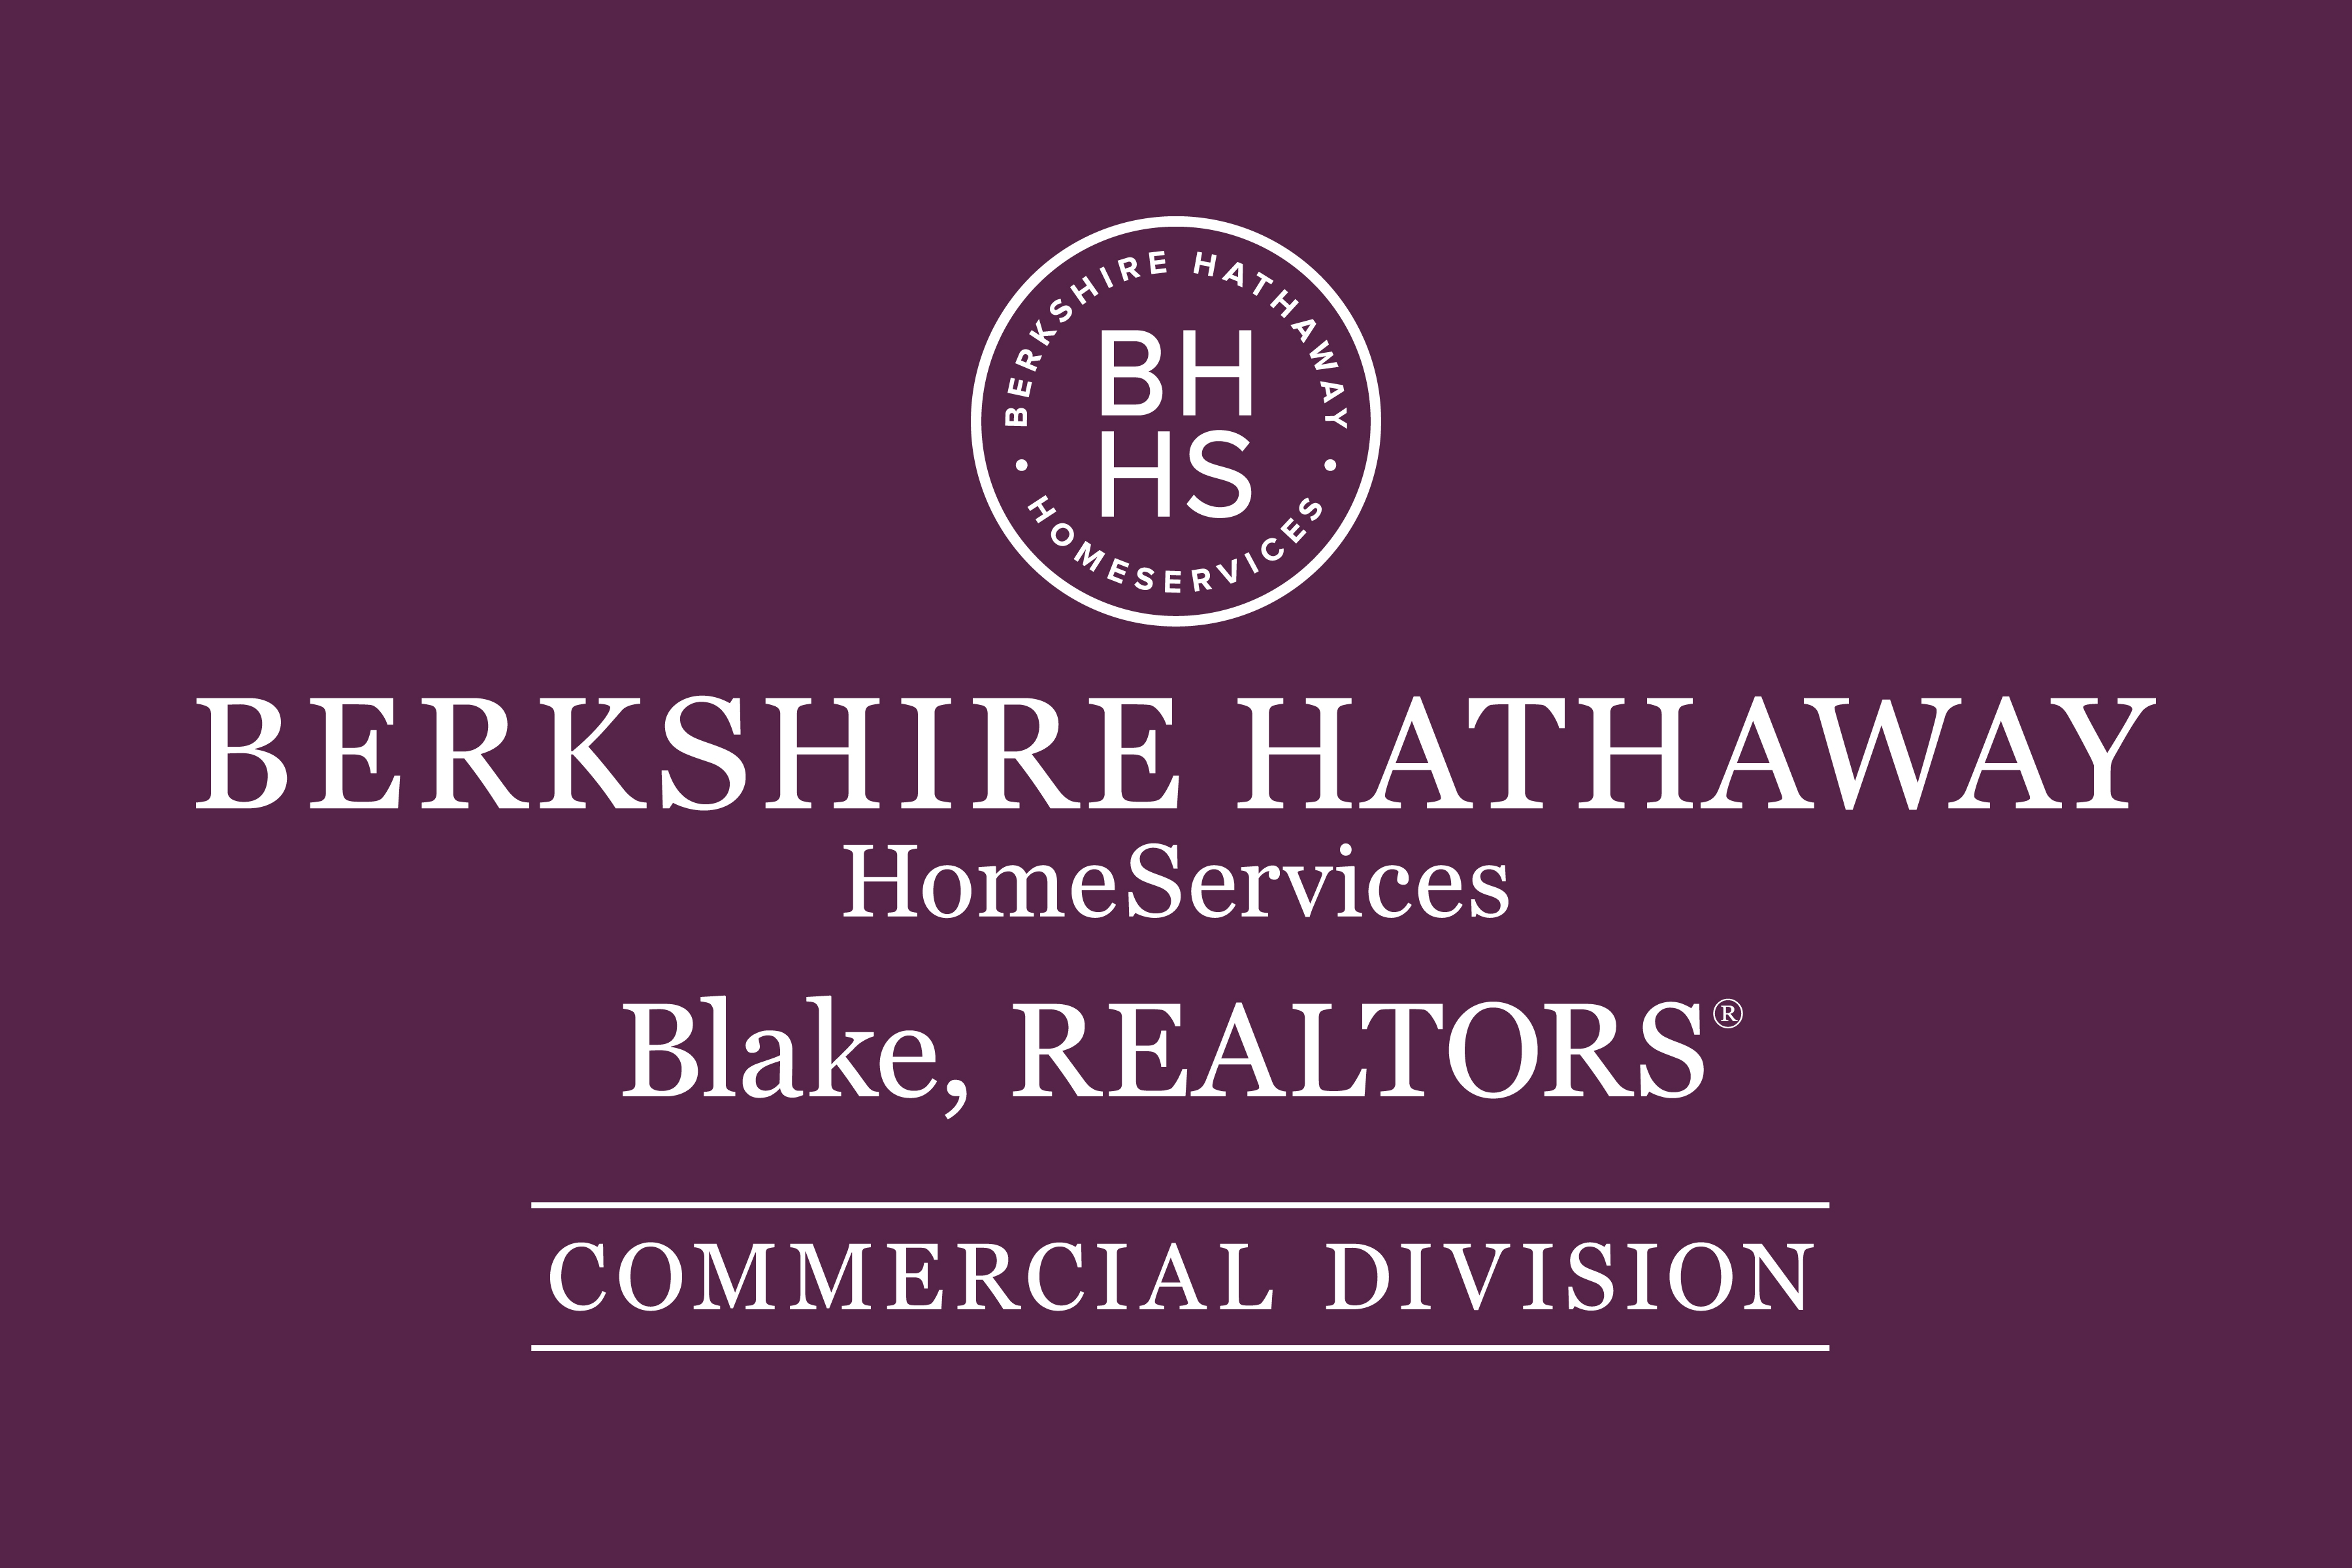 Berkshire Hathaway HomeServices Blake Realtors